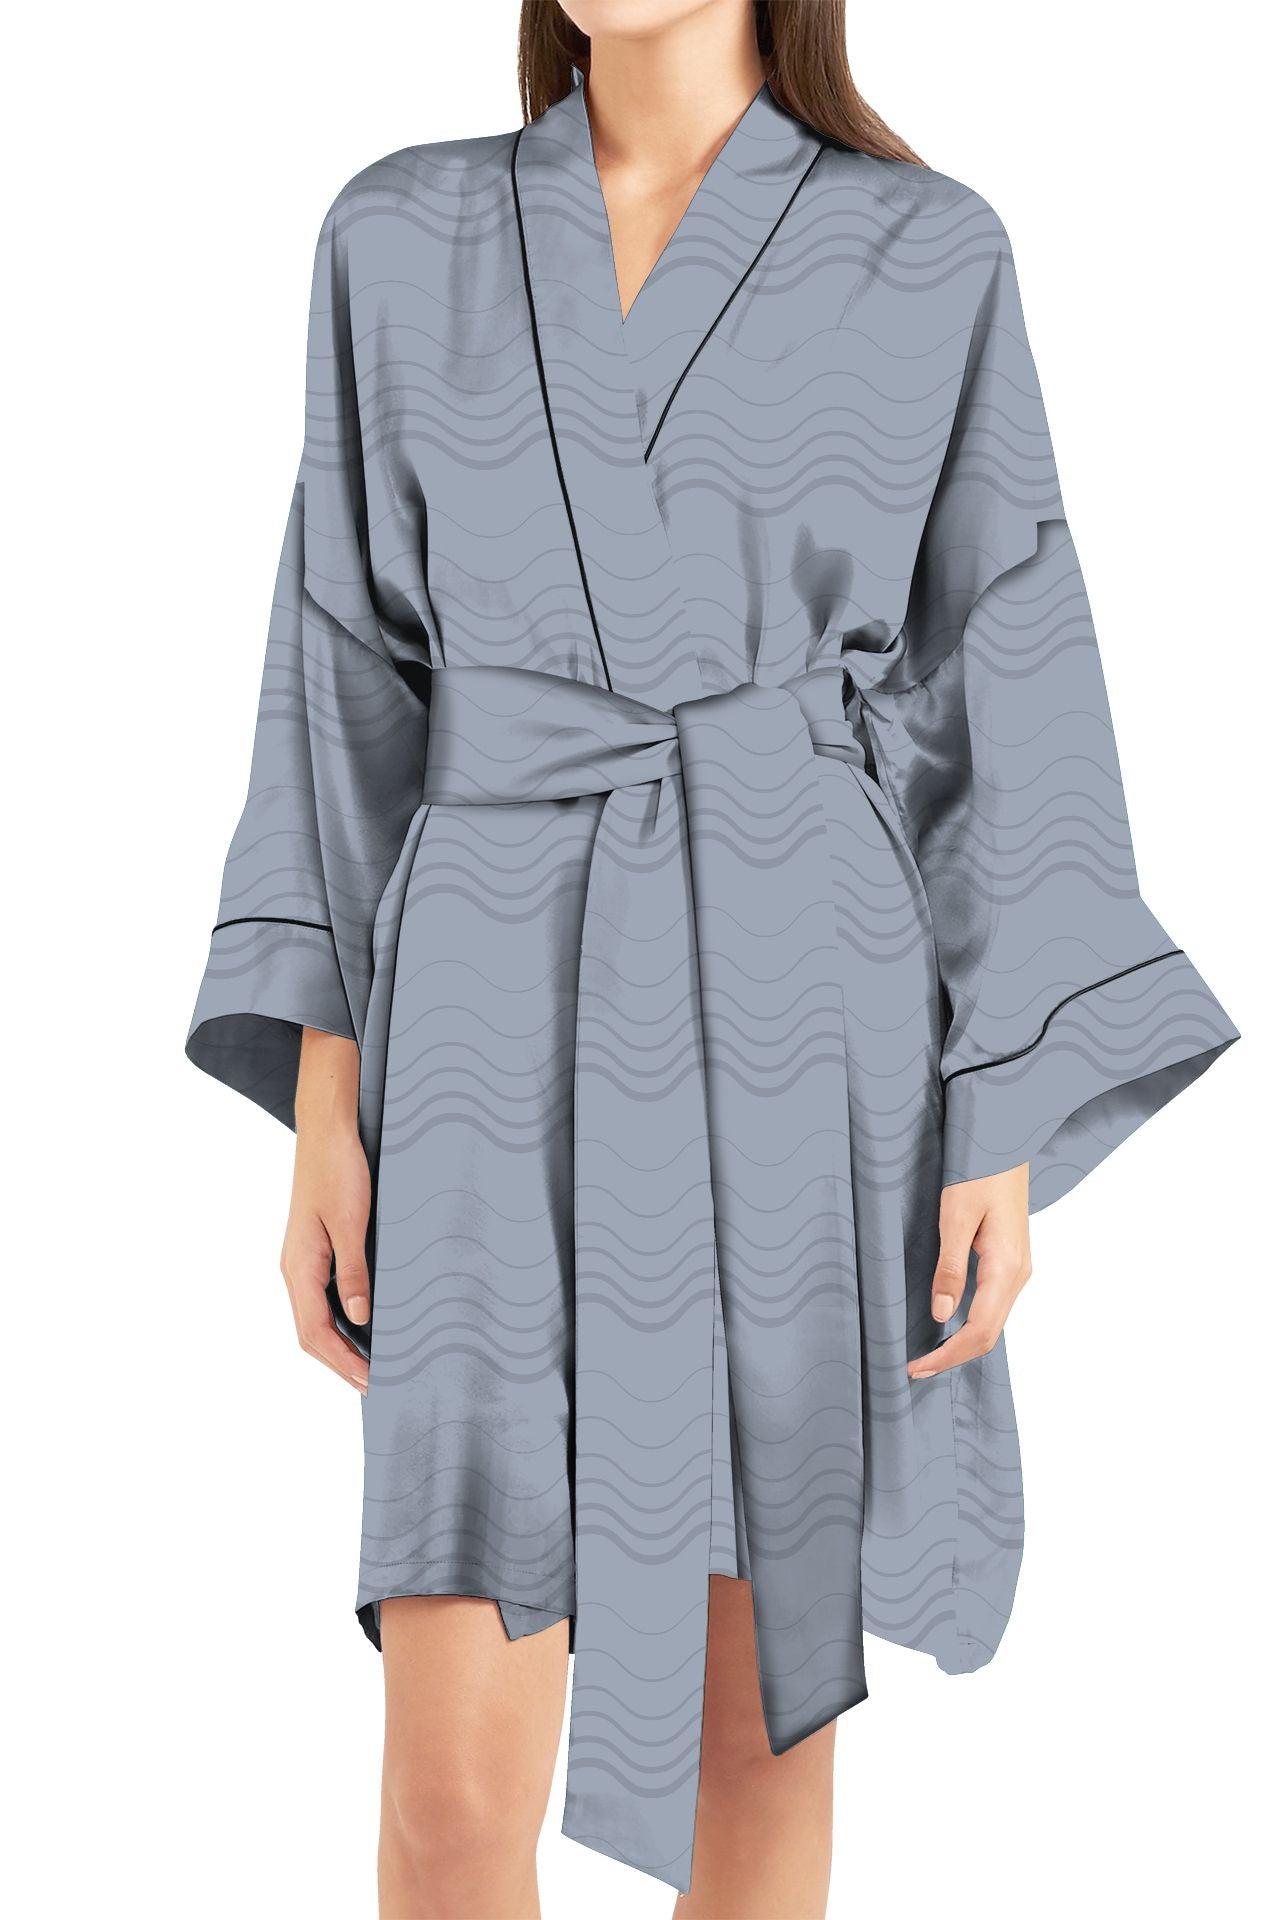 "grey robe womens" "Kyle X Shahida" "grey kimono" "ladies short kimono" "silk robe women short"